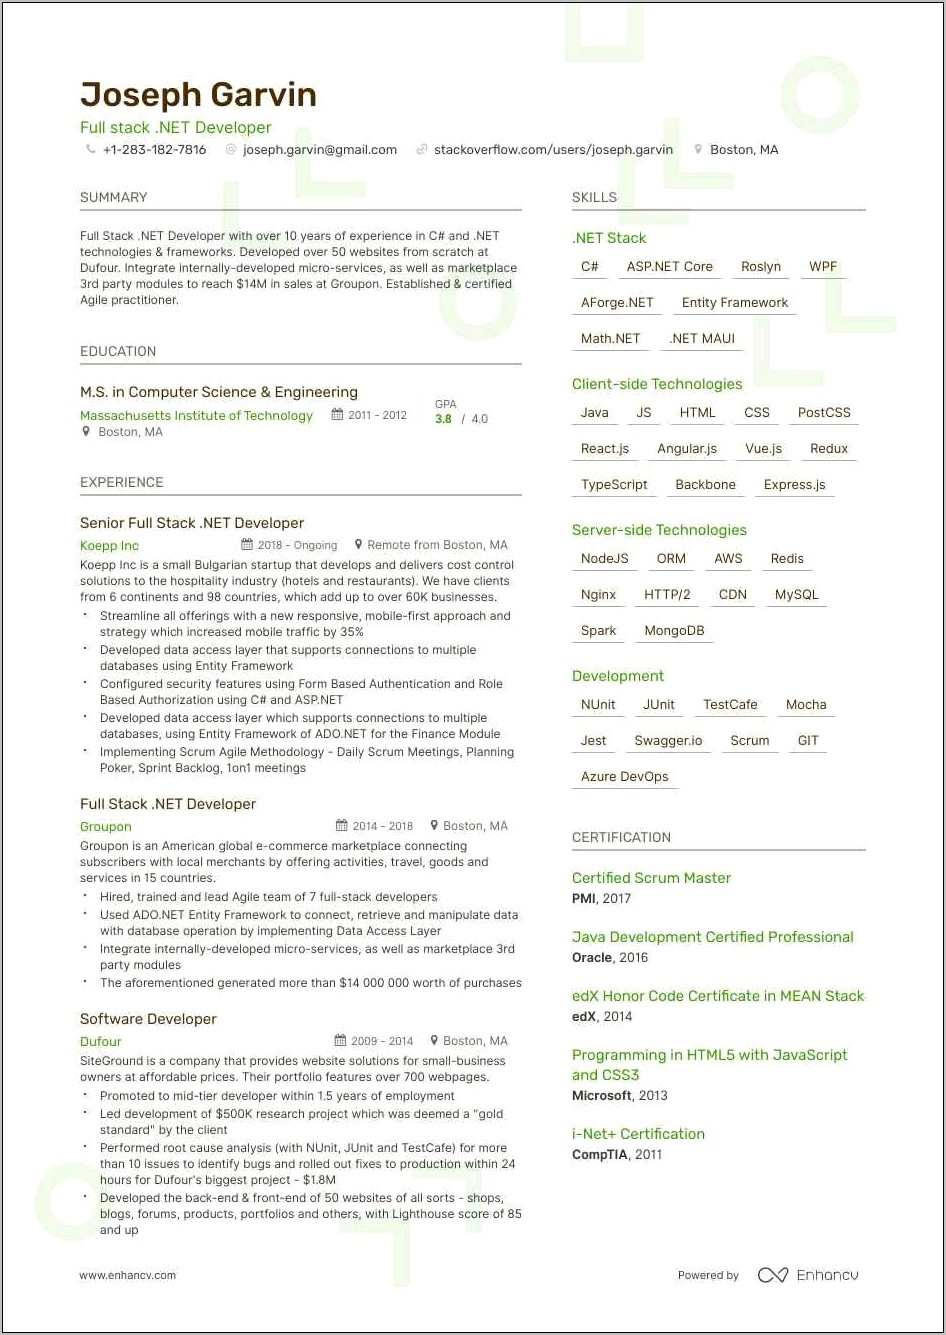 Net Developer Resume With Angularjs Experience